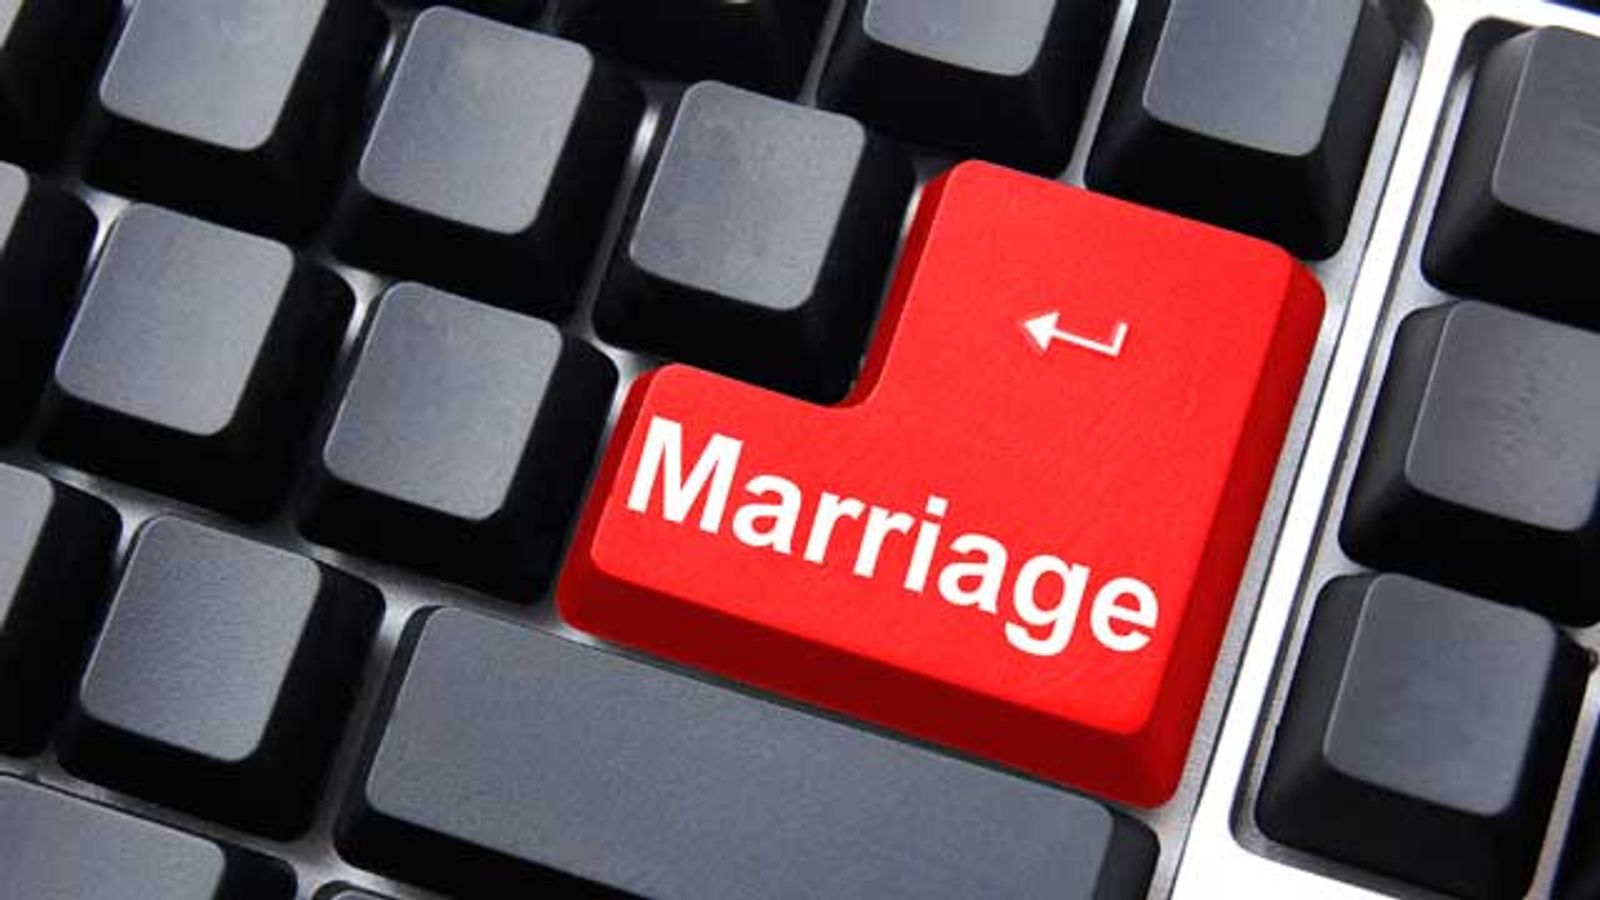 Web Cam Company Spurs True Love, Marriage